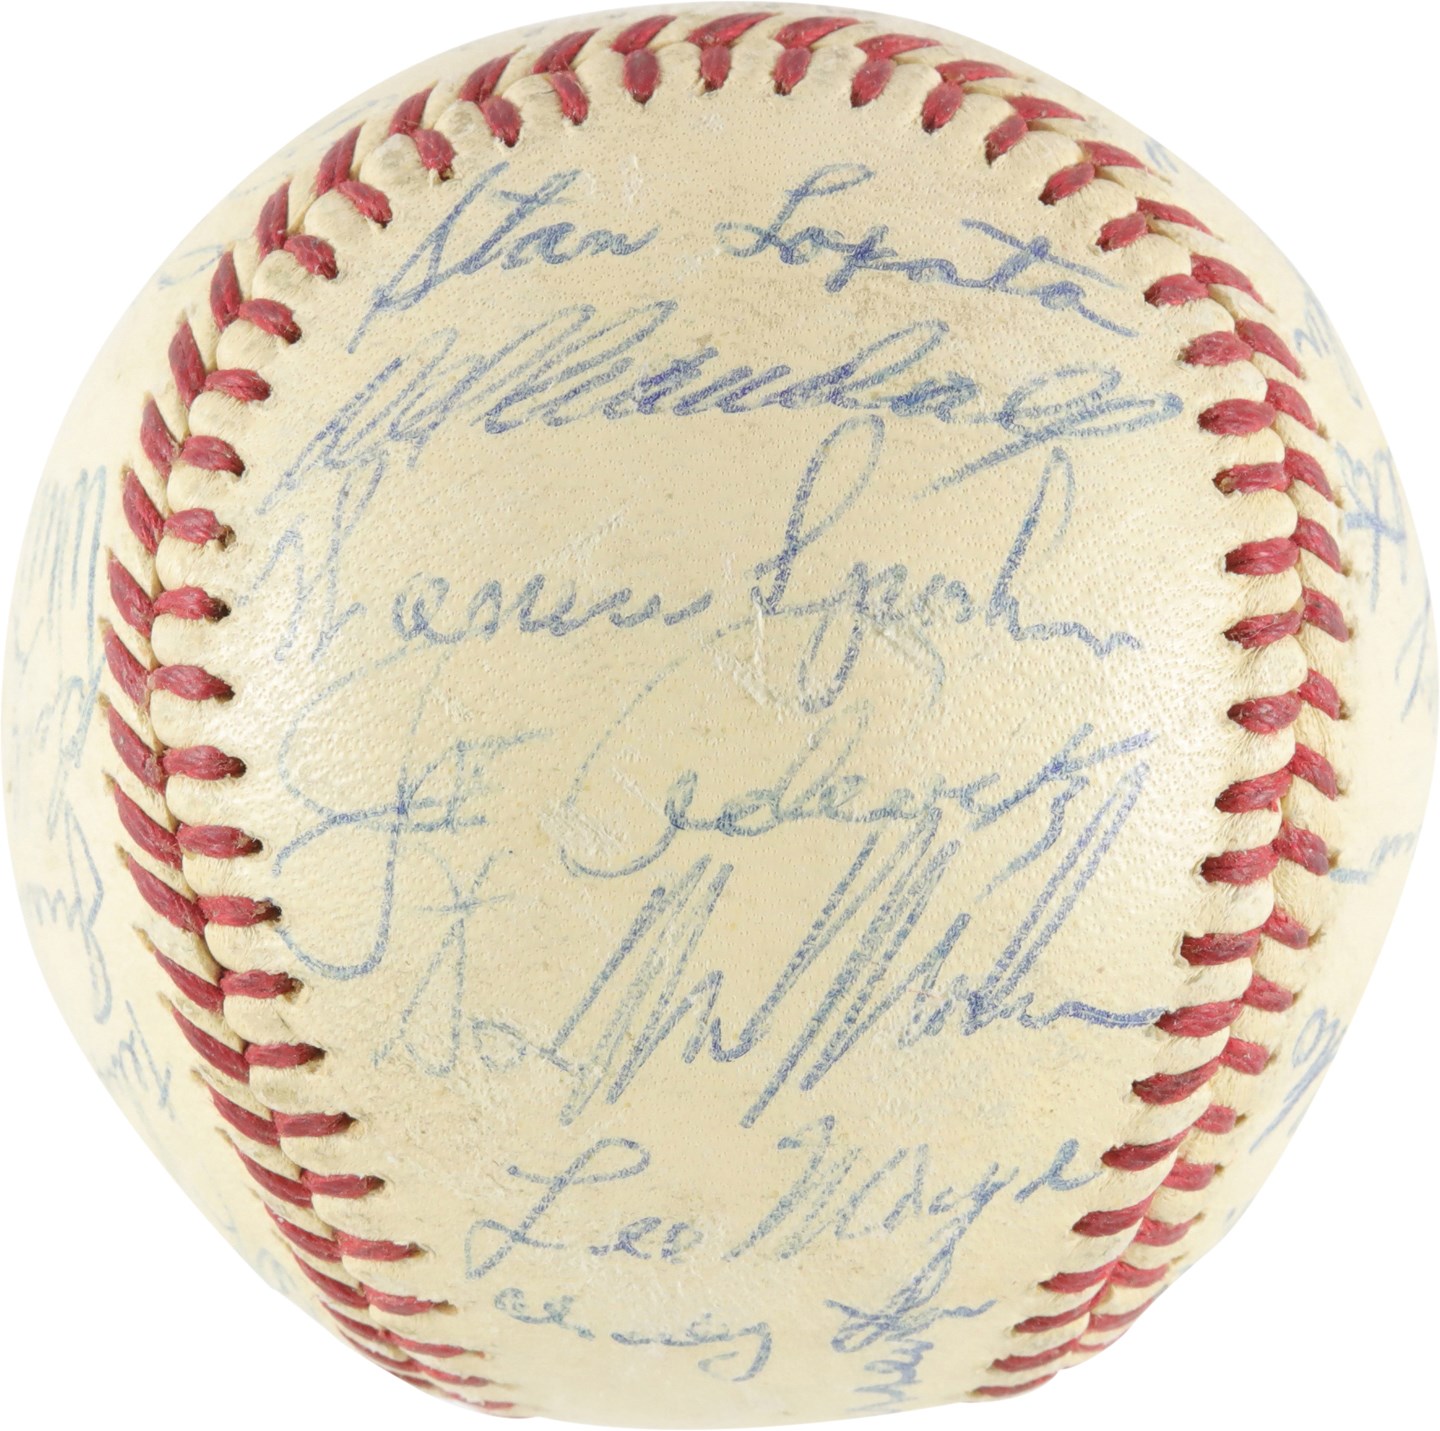 Baseball Autographs - 1960 Milwaukee Braves Team-Signed Baseball w/Aaron, Mathews & Spahn (PSA)